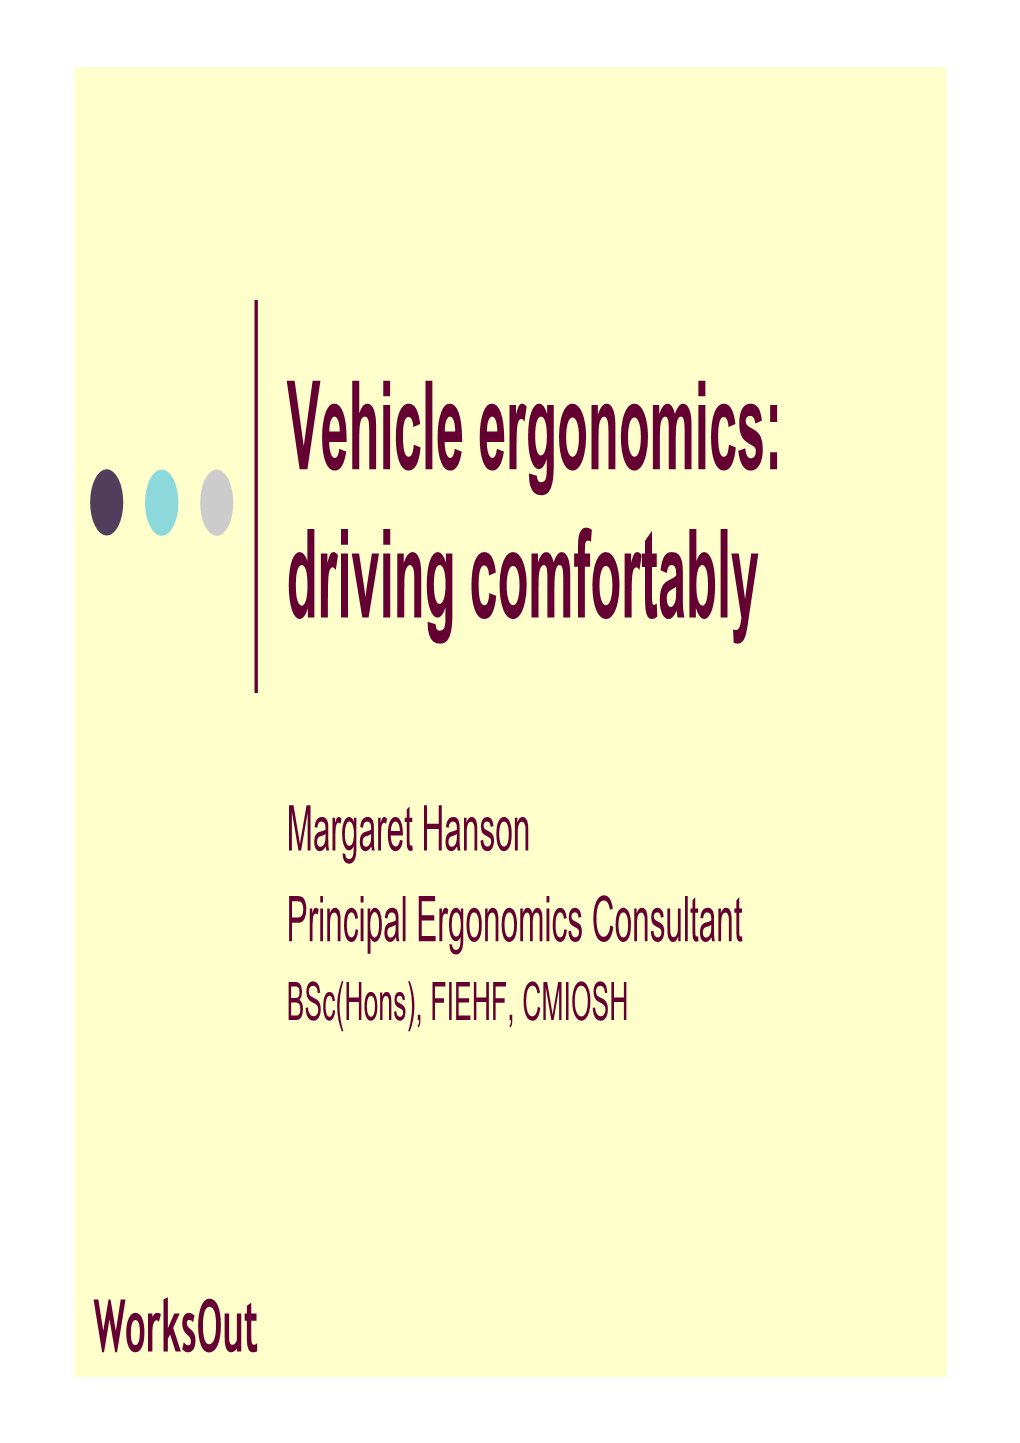 Vehicle Ergonomics Talk